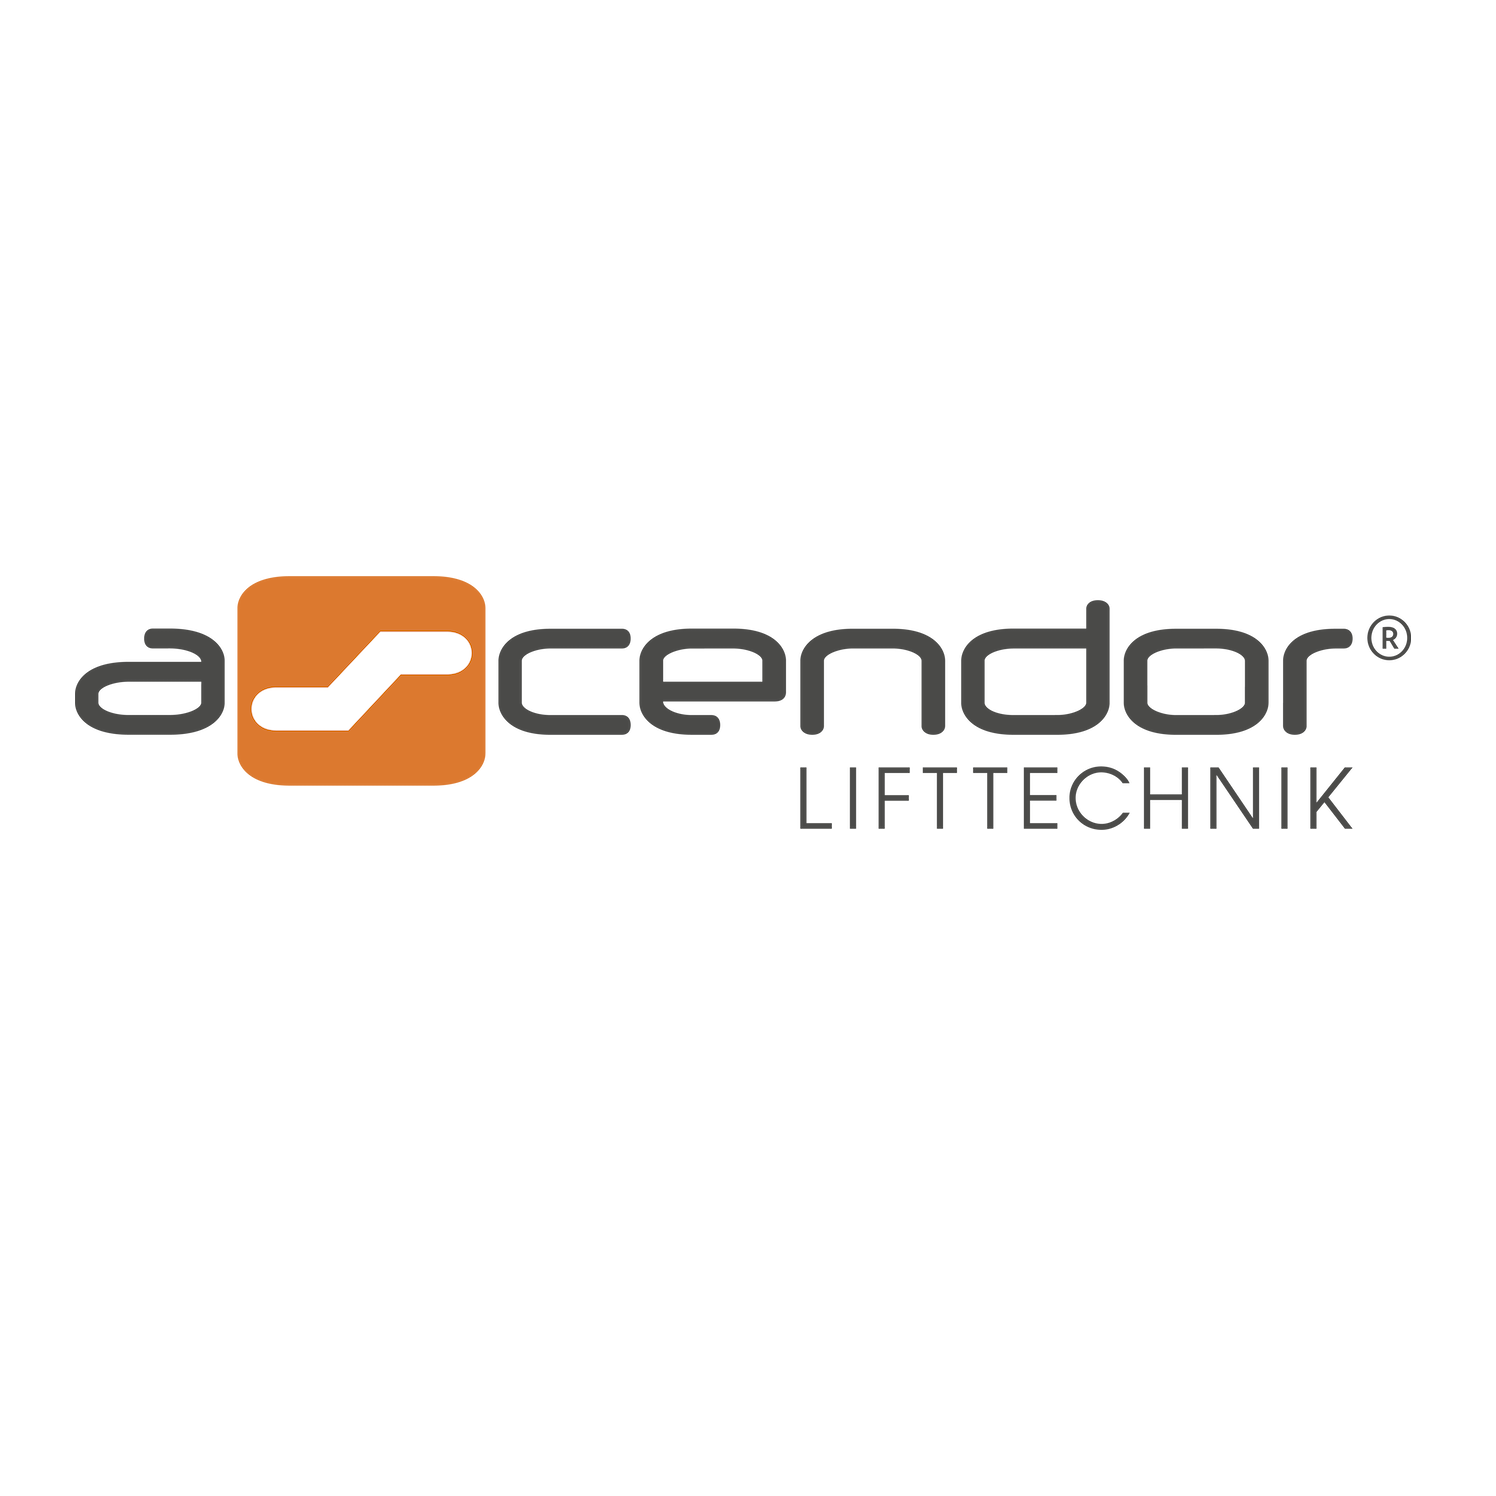 Ascendor GmbH